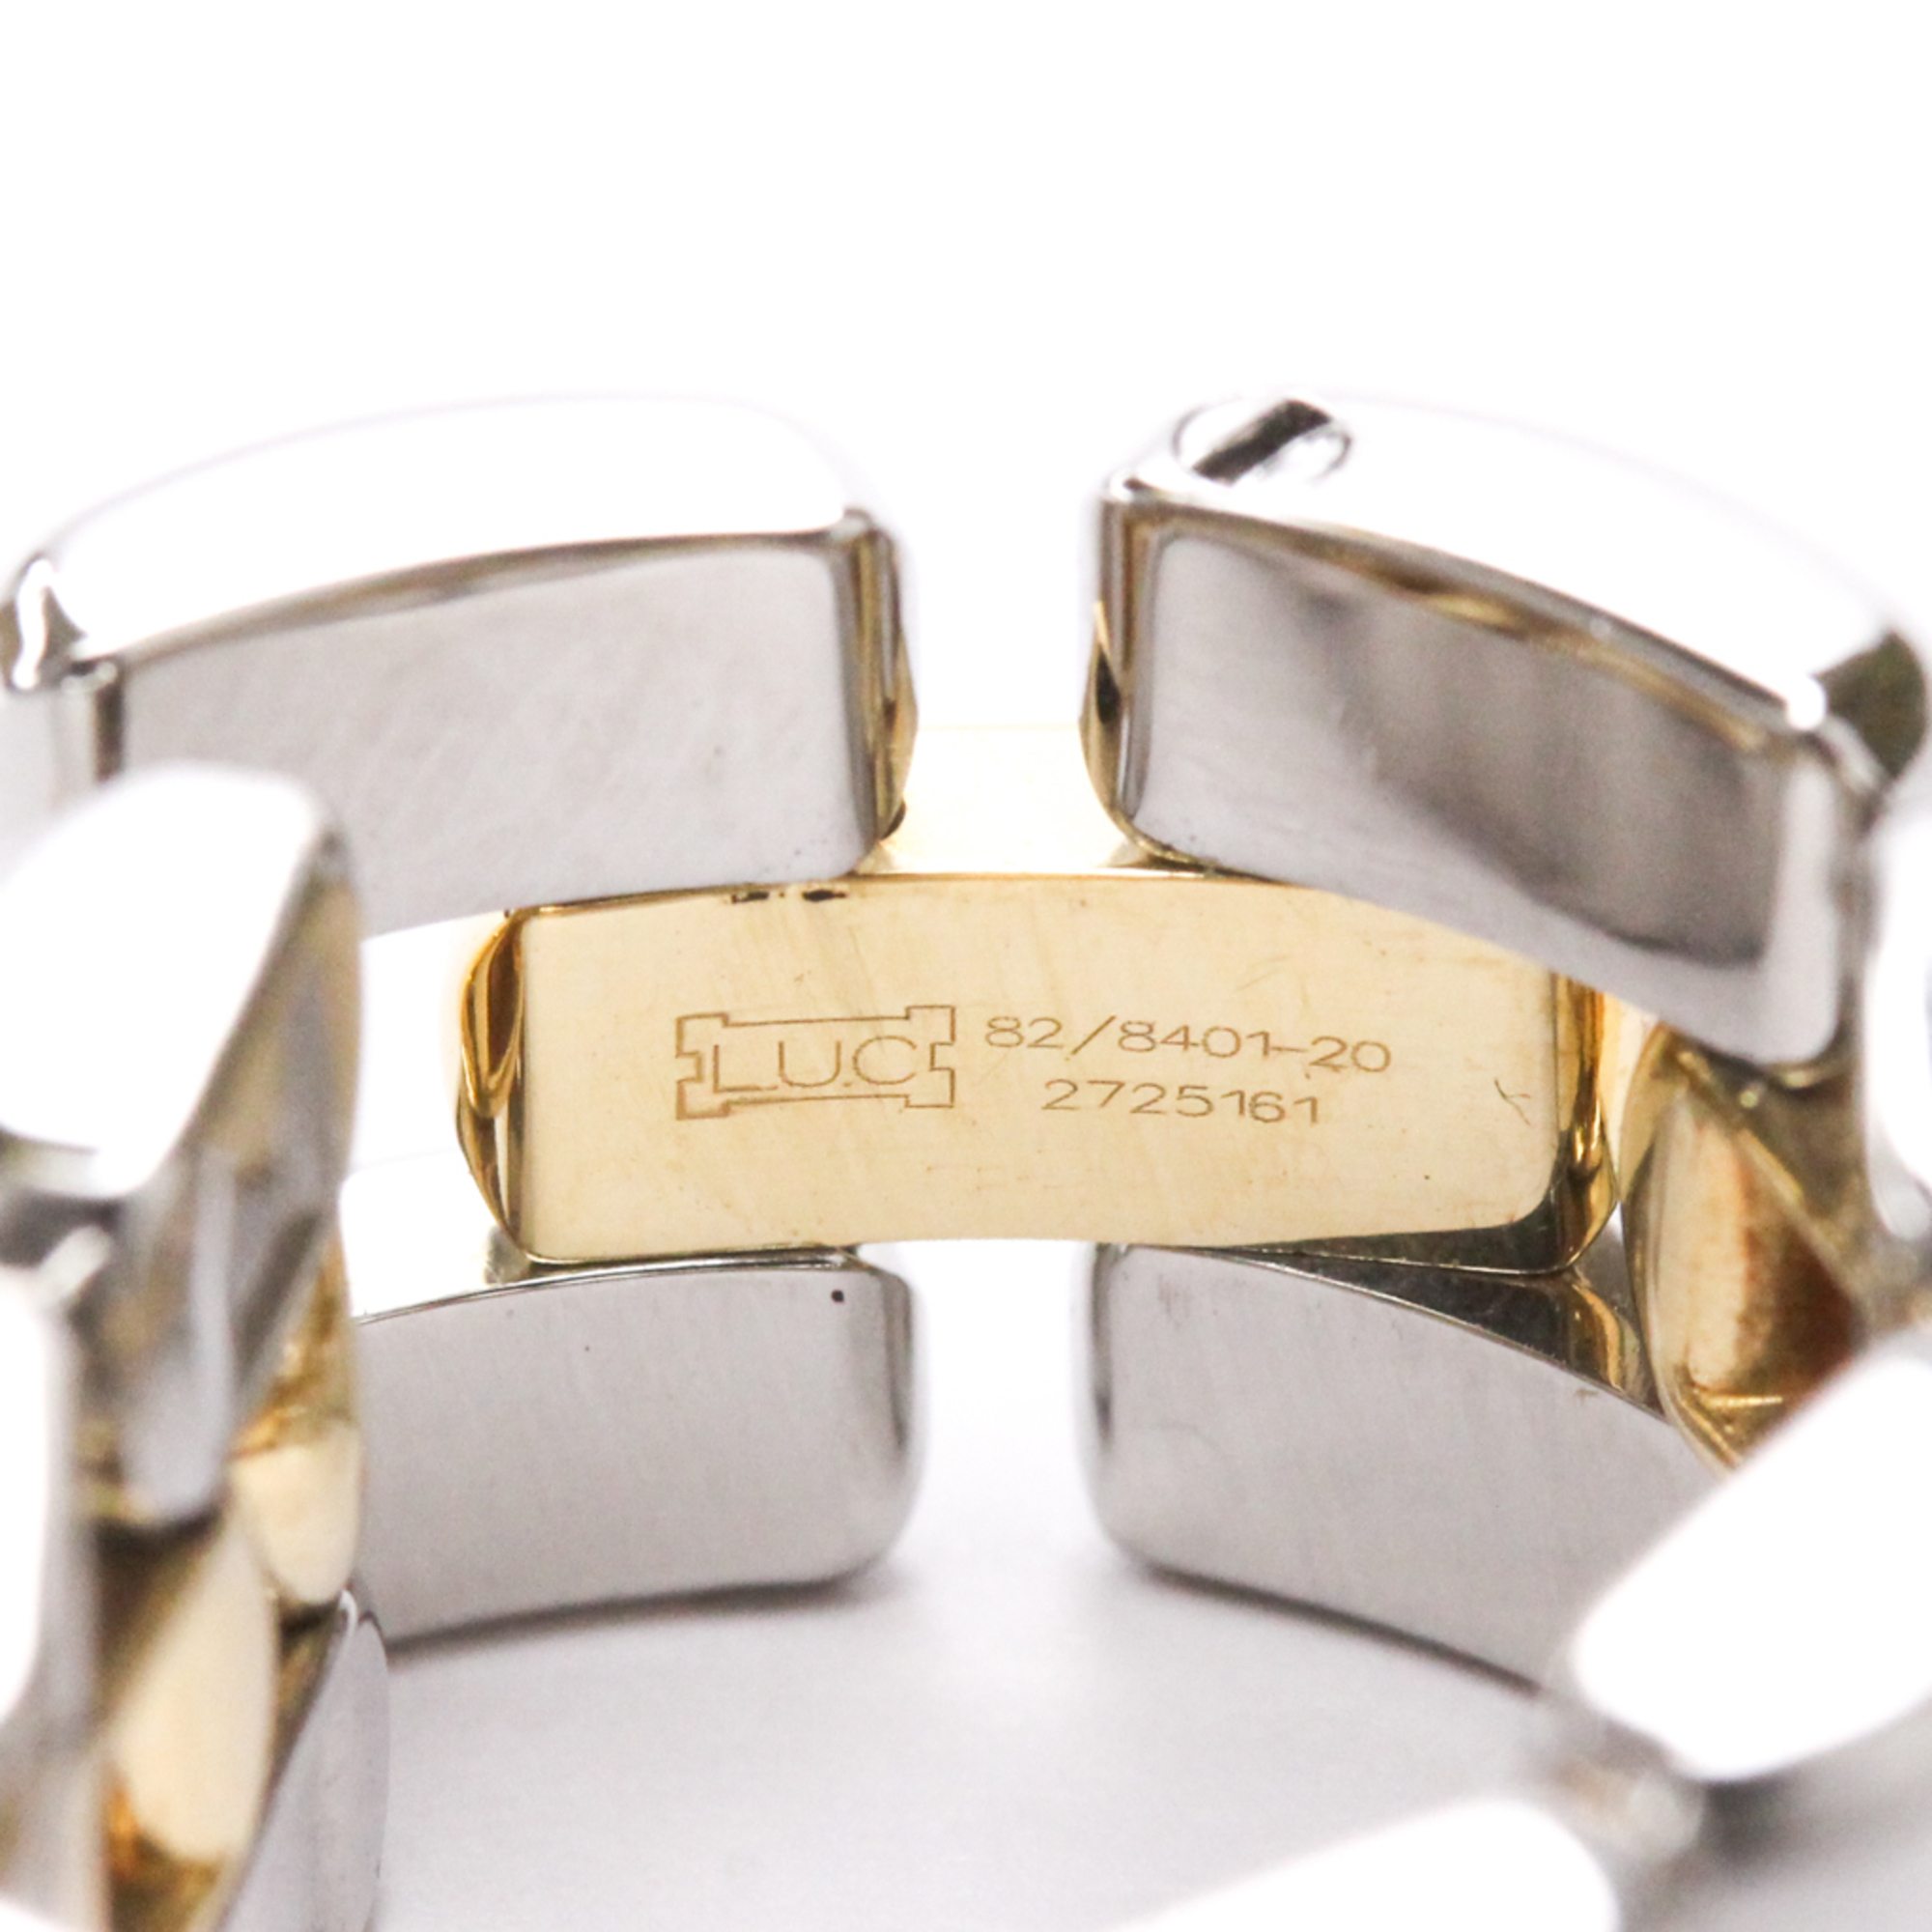 Chopard Happy Diamonds 82/8401-20 White Gold (18K),Yellow Gold (18K) Diamond Band Ring